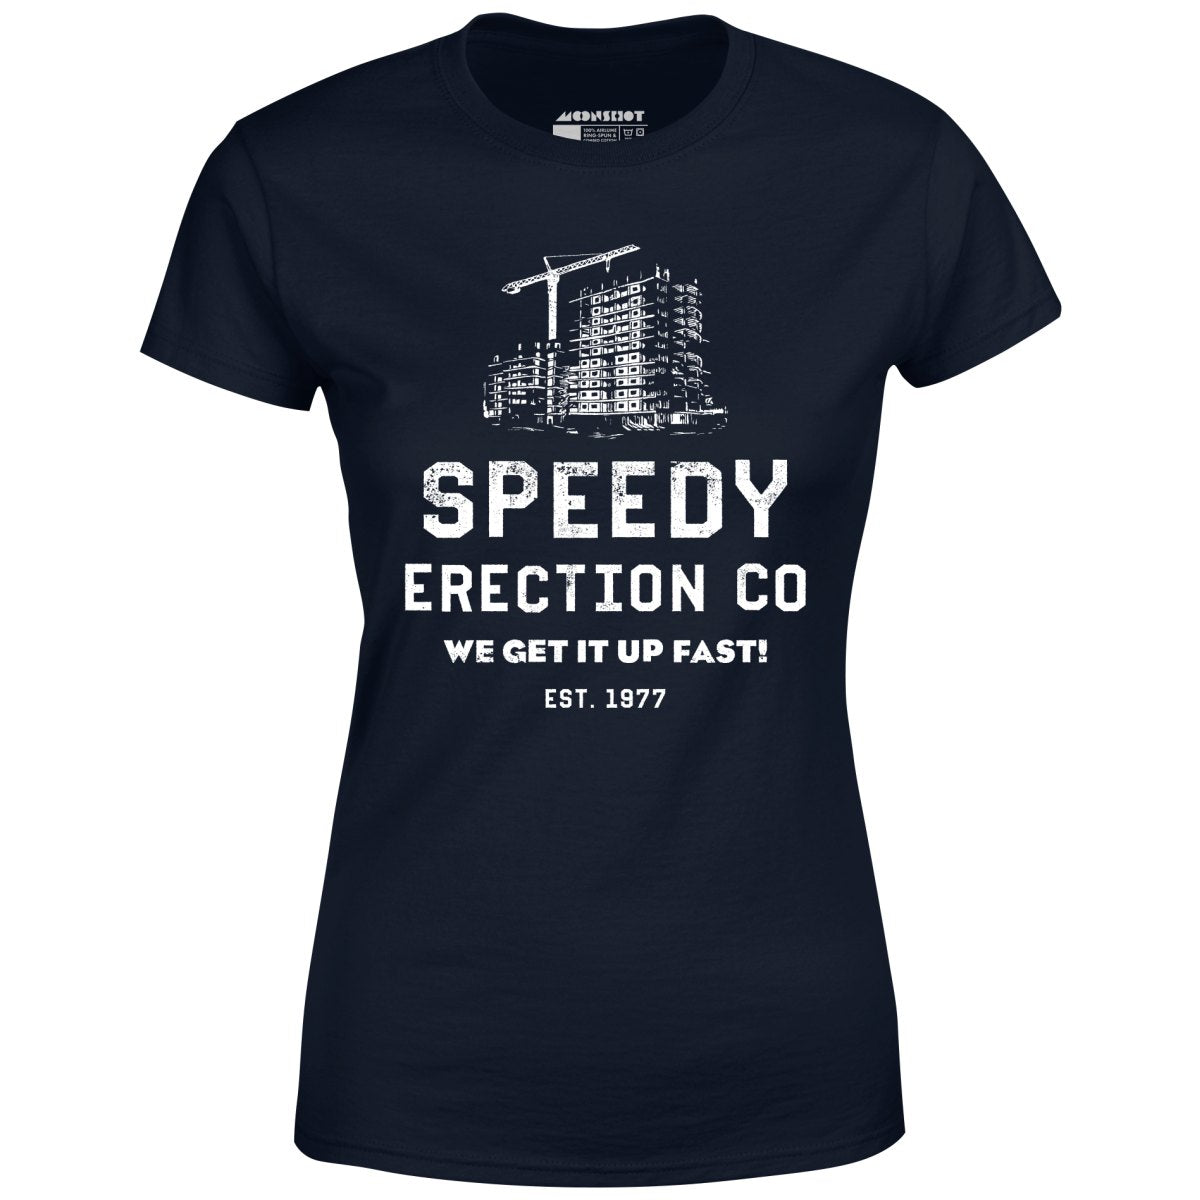 Speedy Erection Co. We Get it Up Fast - Women's T-Shirt